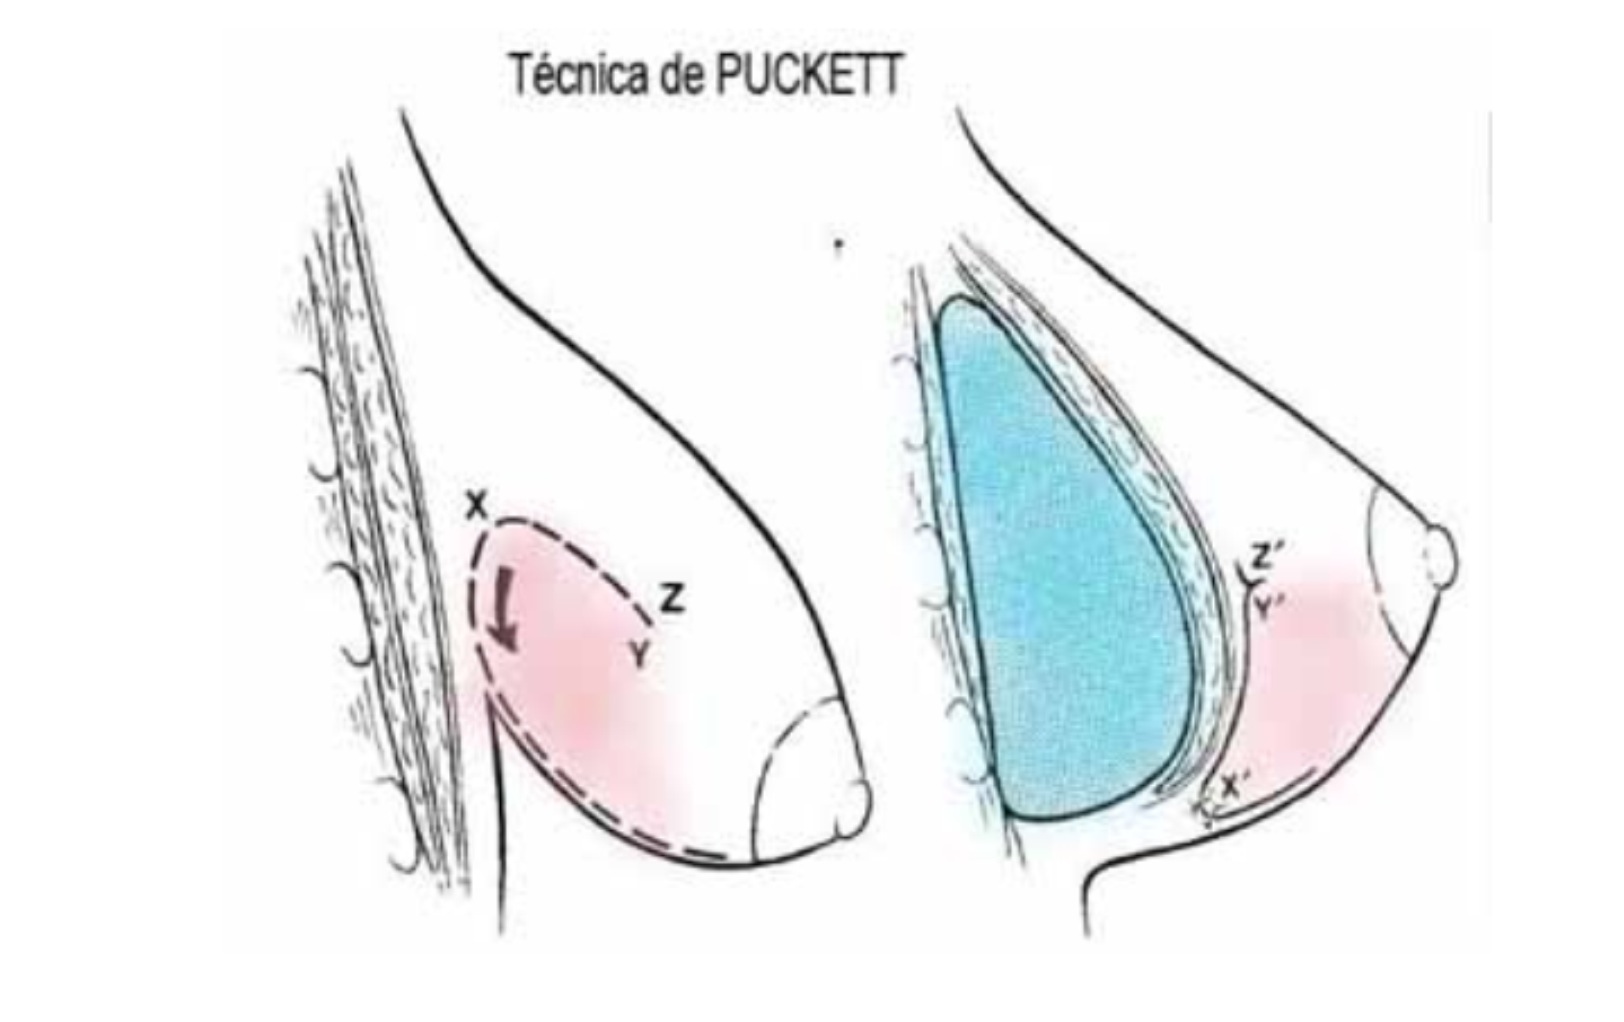 тубулярная форма груди у женщин фото 106